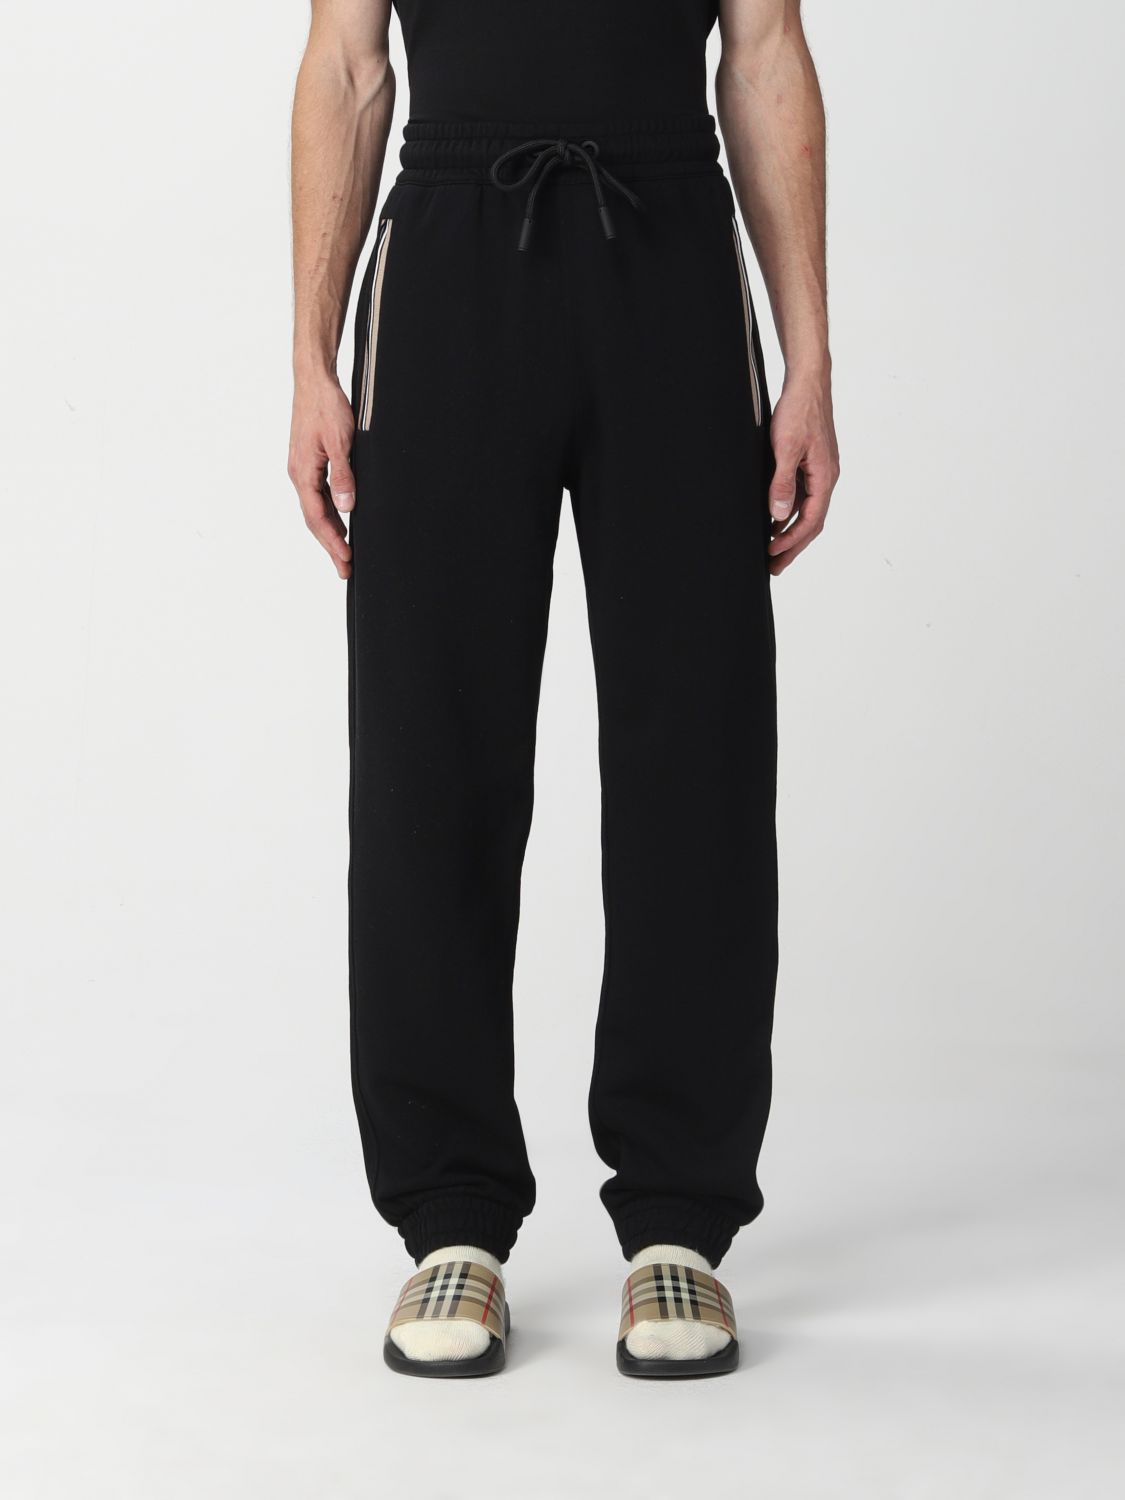 BURBERRY: cotton jogging pants with striped pattern - Black | Pants ...